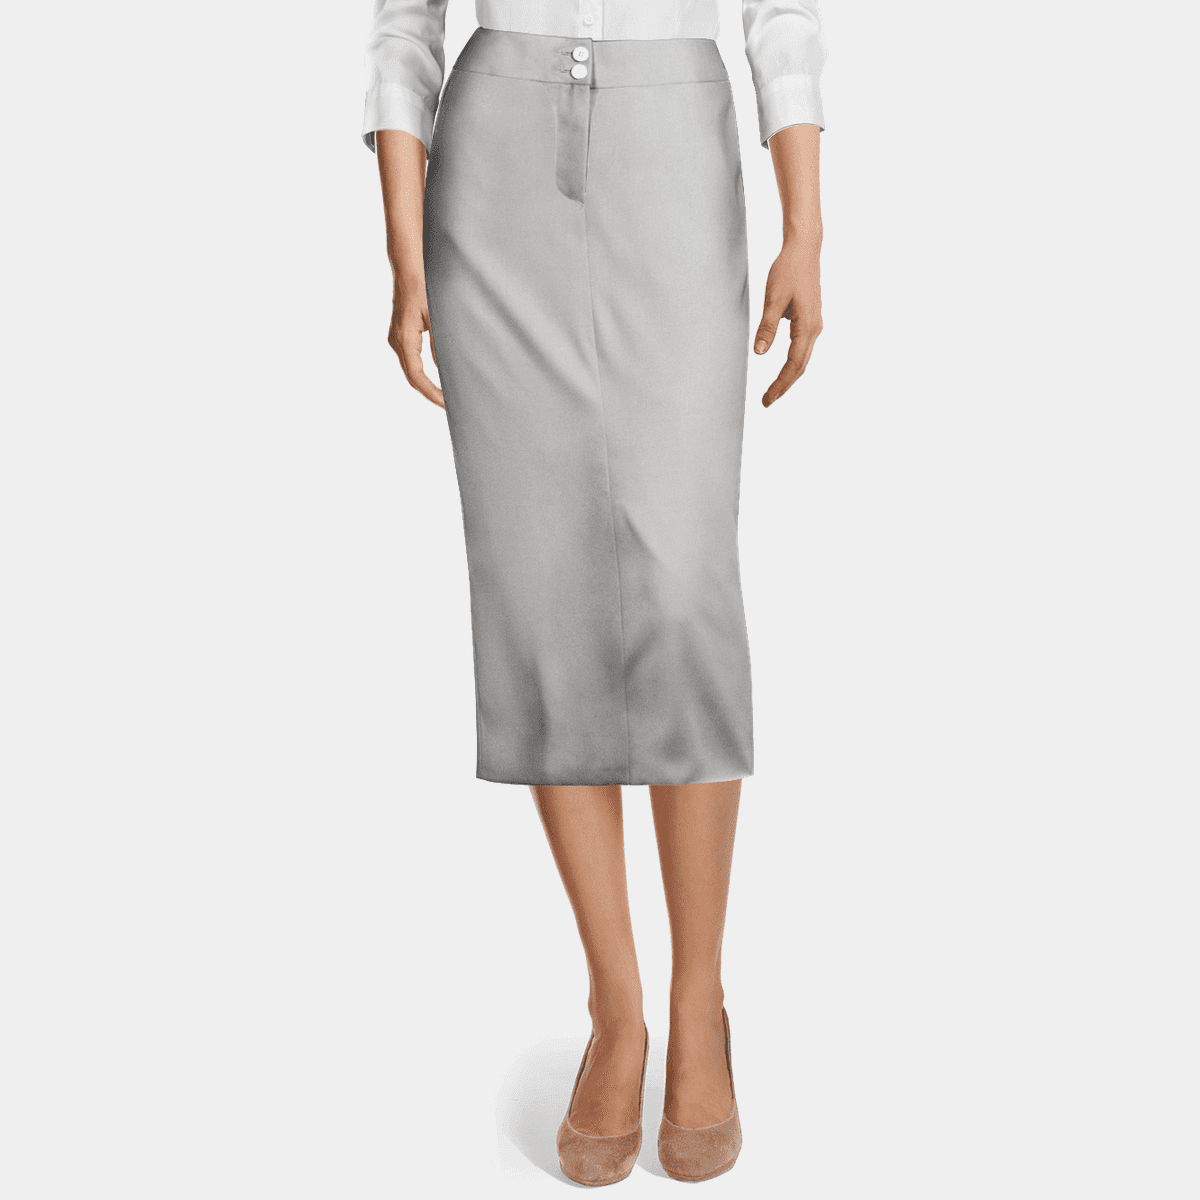 grey cotton pencil skirt